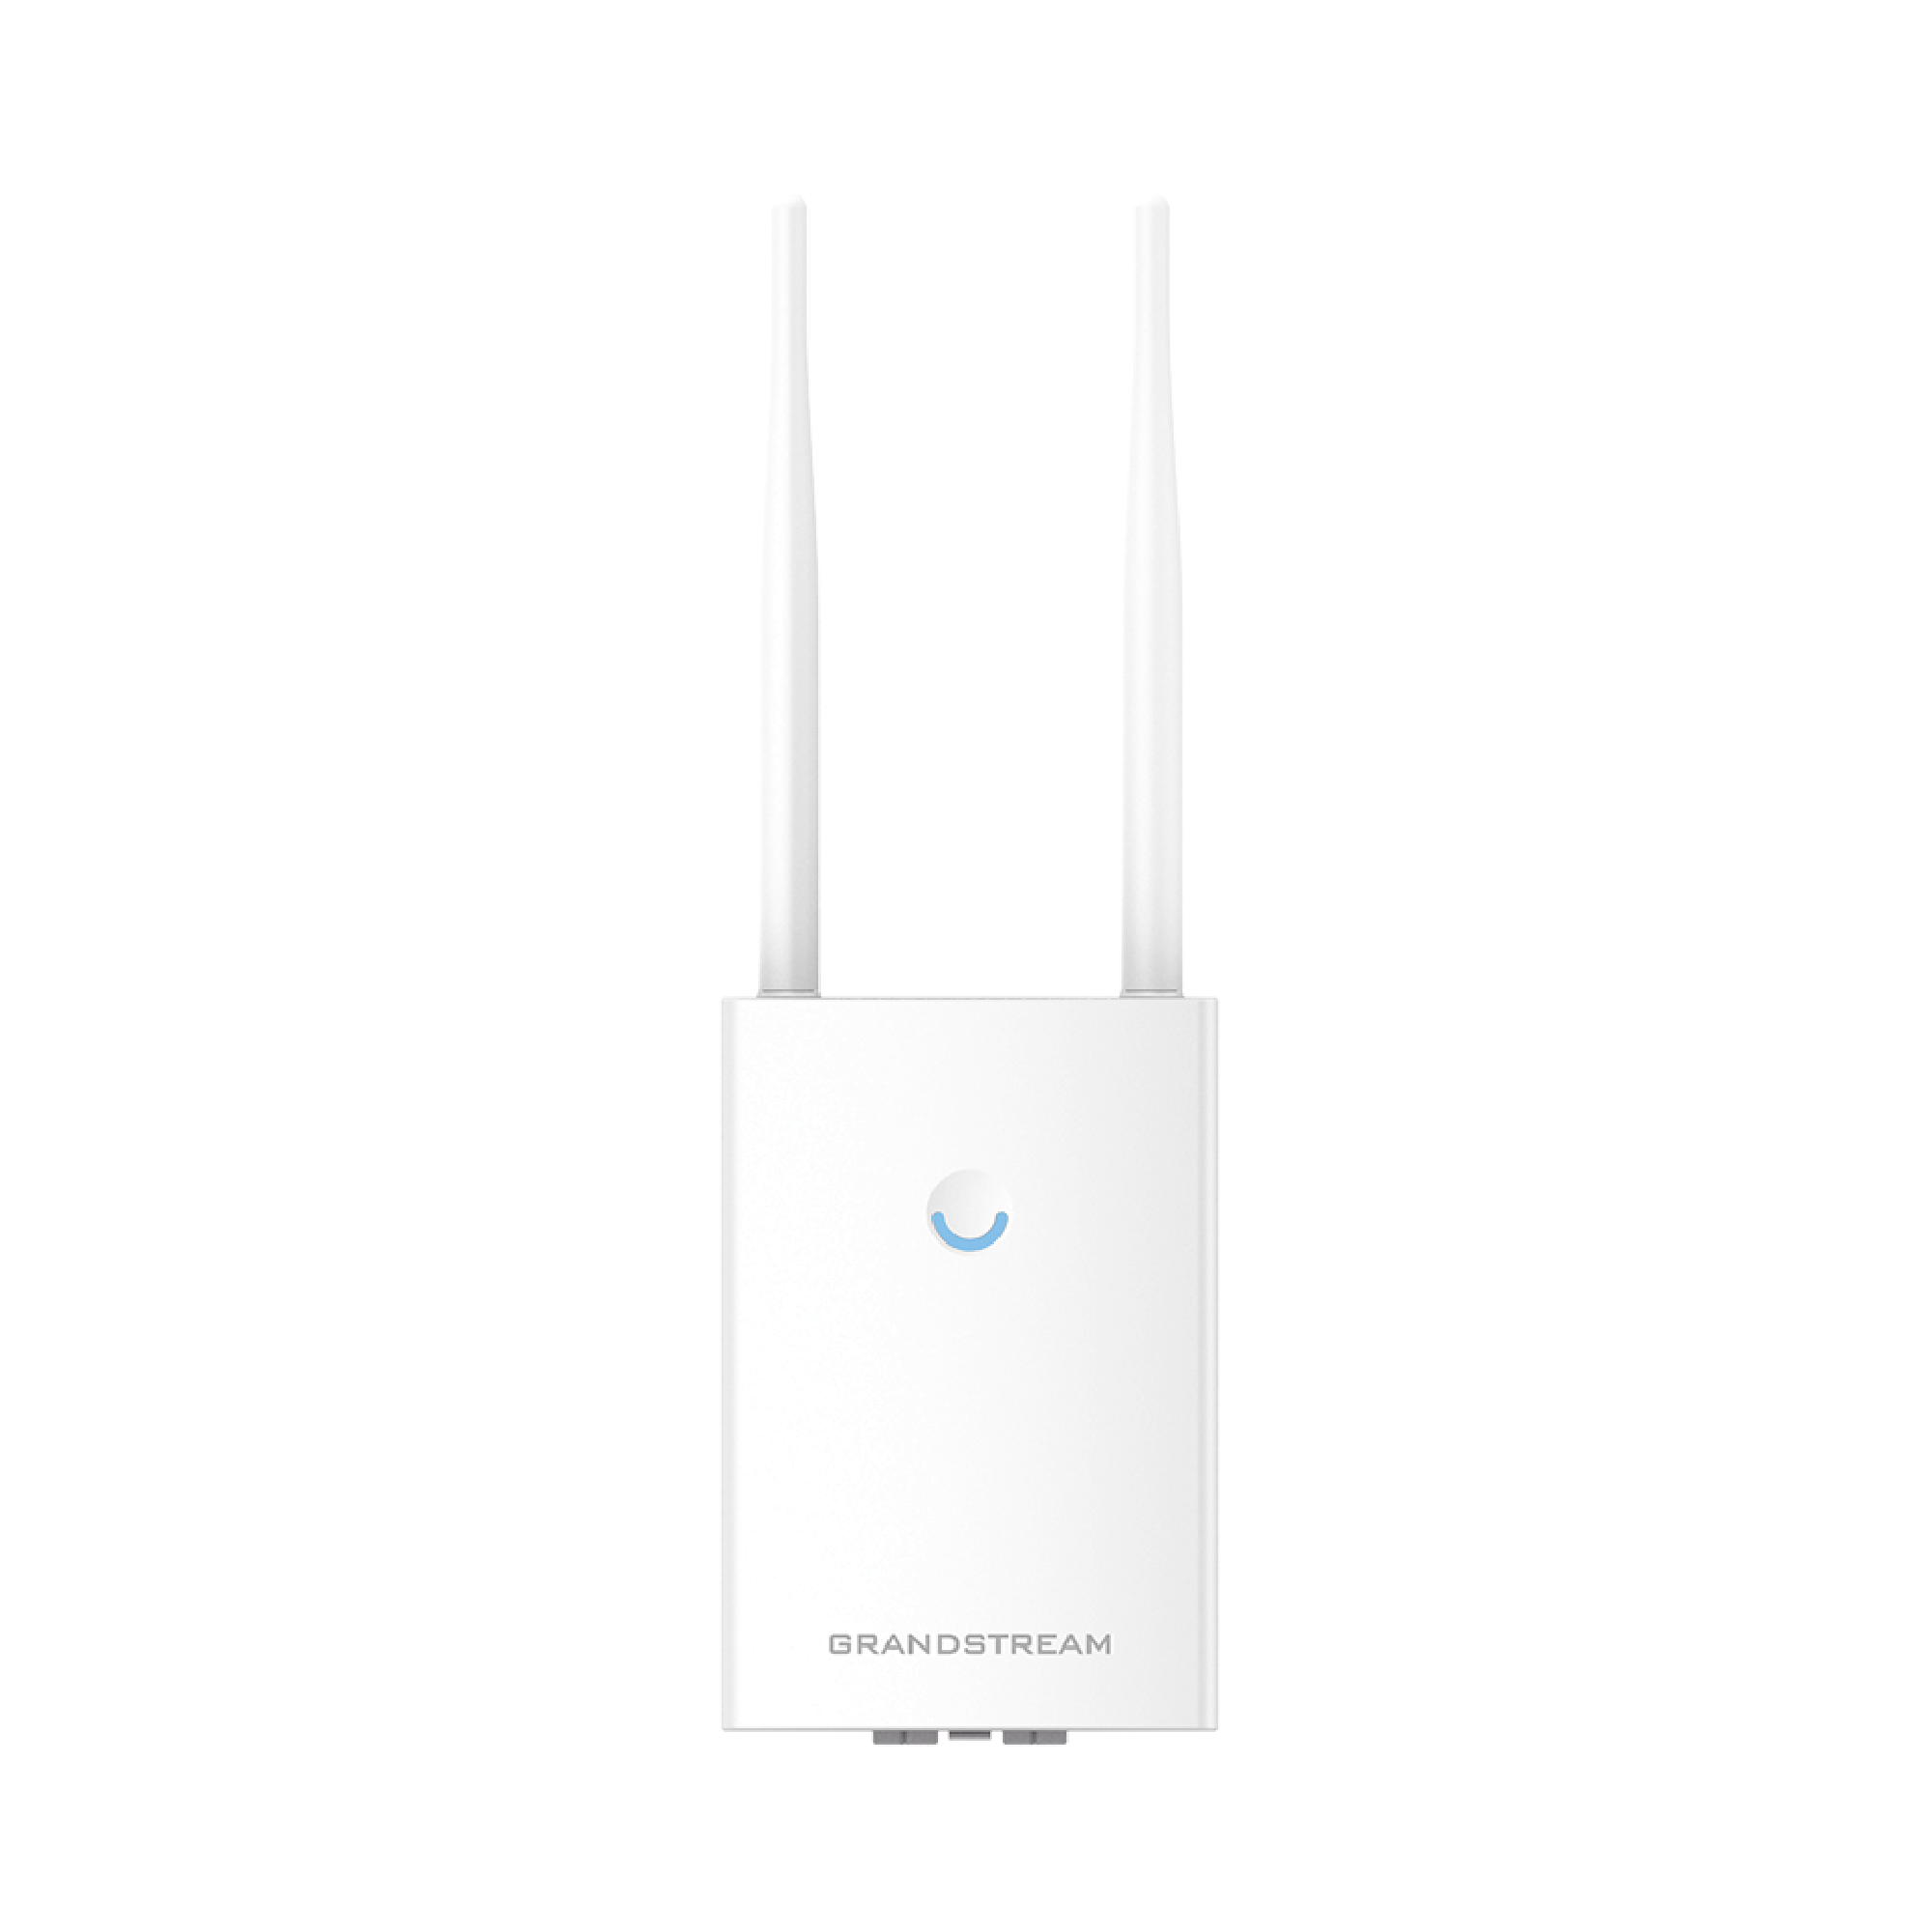 Punto de acceso para exterior Wi-Fi 802.11 ac 1.27 Gbps, Wave-2, MU-MIMO 2x2:2 con administración desde la nube gratuita o stand-alone.